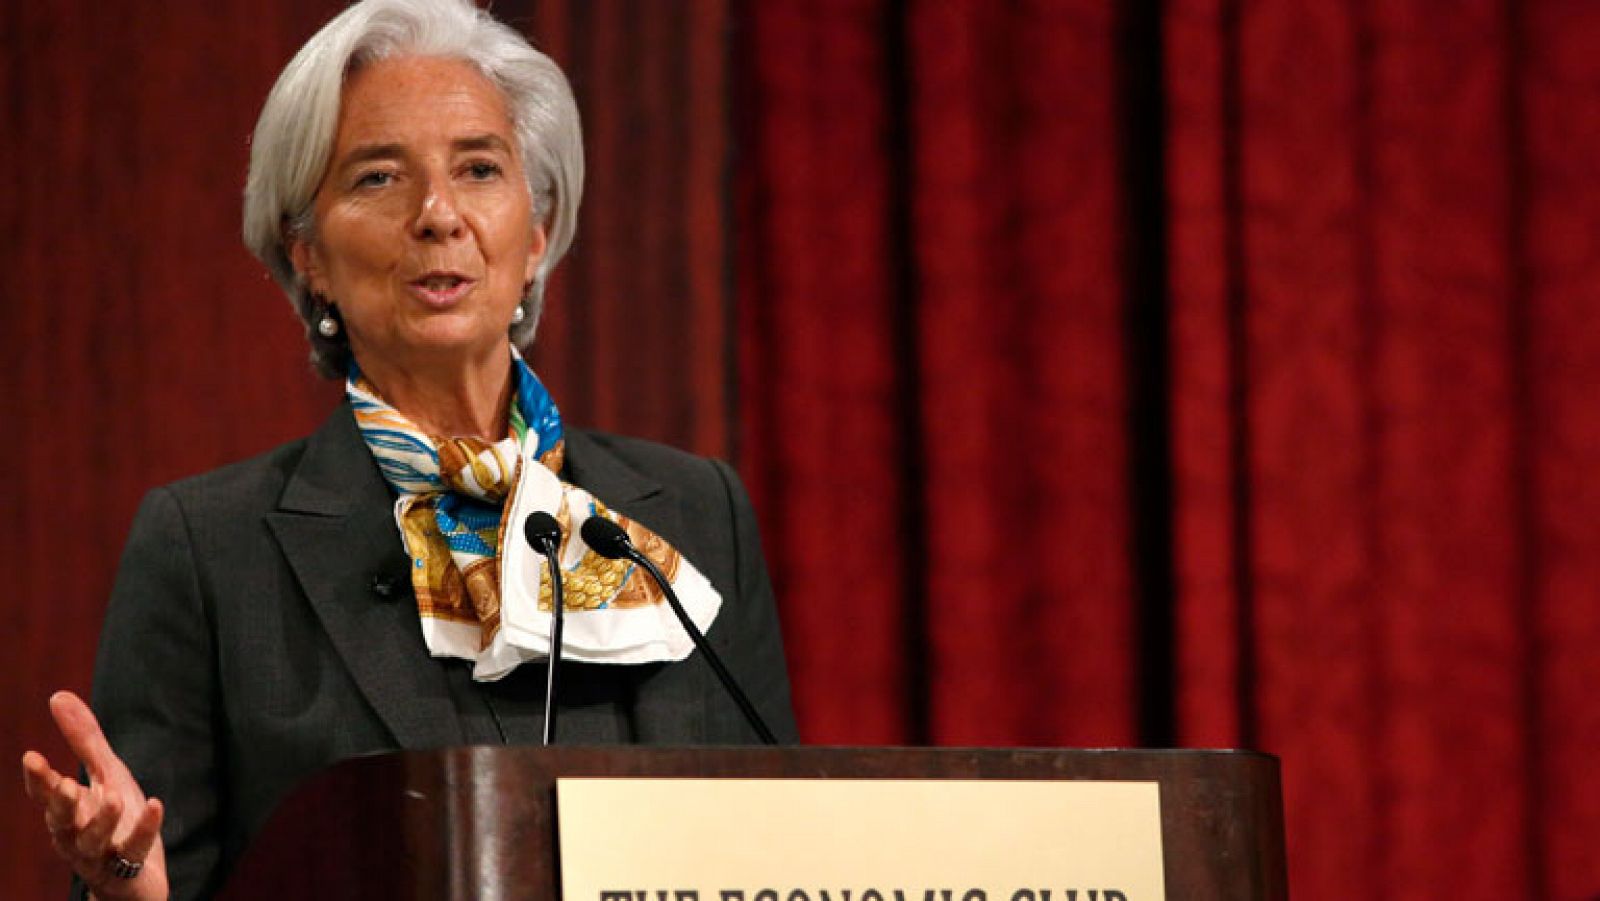 Telediario 1: La directora del FMI, Christine Lagarde, aboga por la unión bancaria en la zona euro | RTVE Play